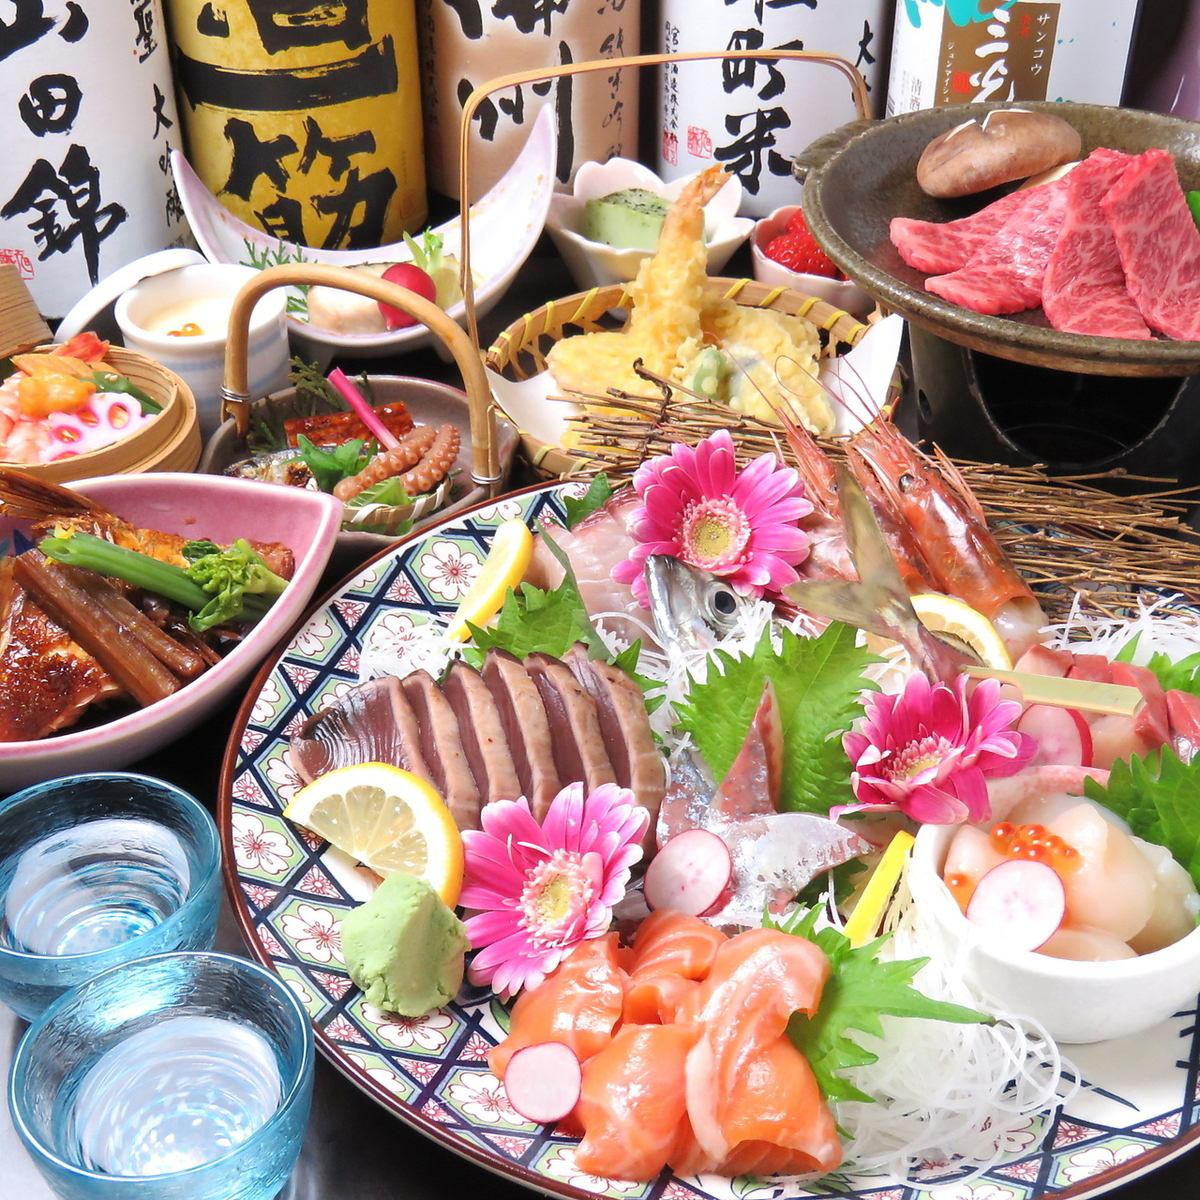 You can enjoy fresh seasonal seafood centered on "Okayama's features".